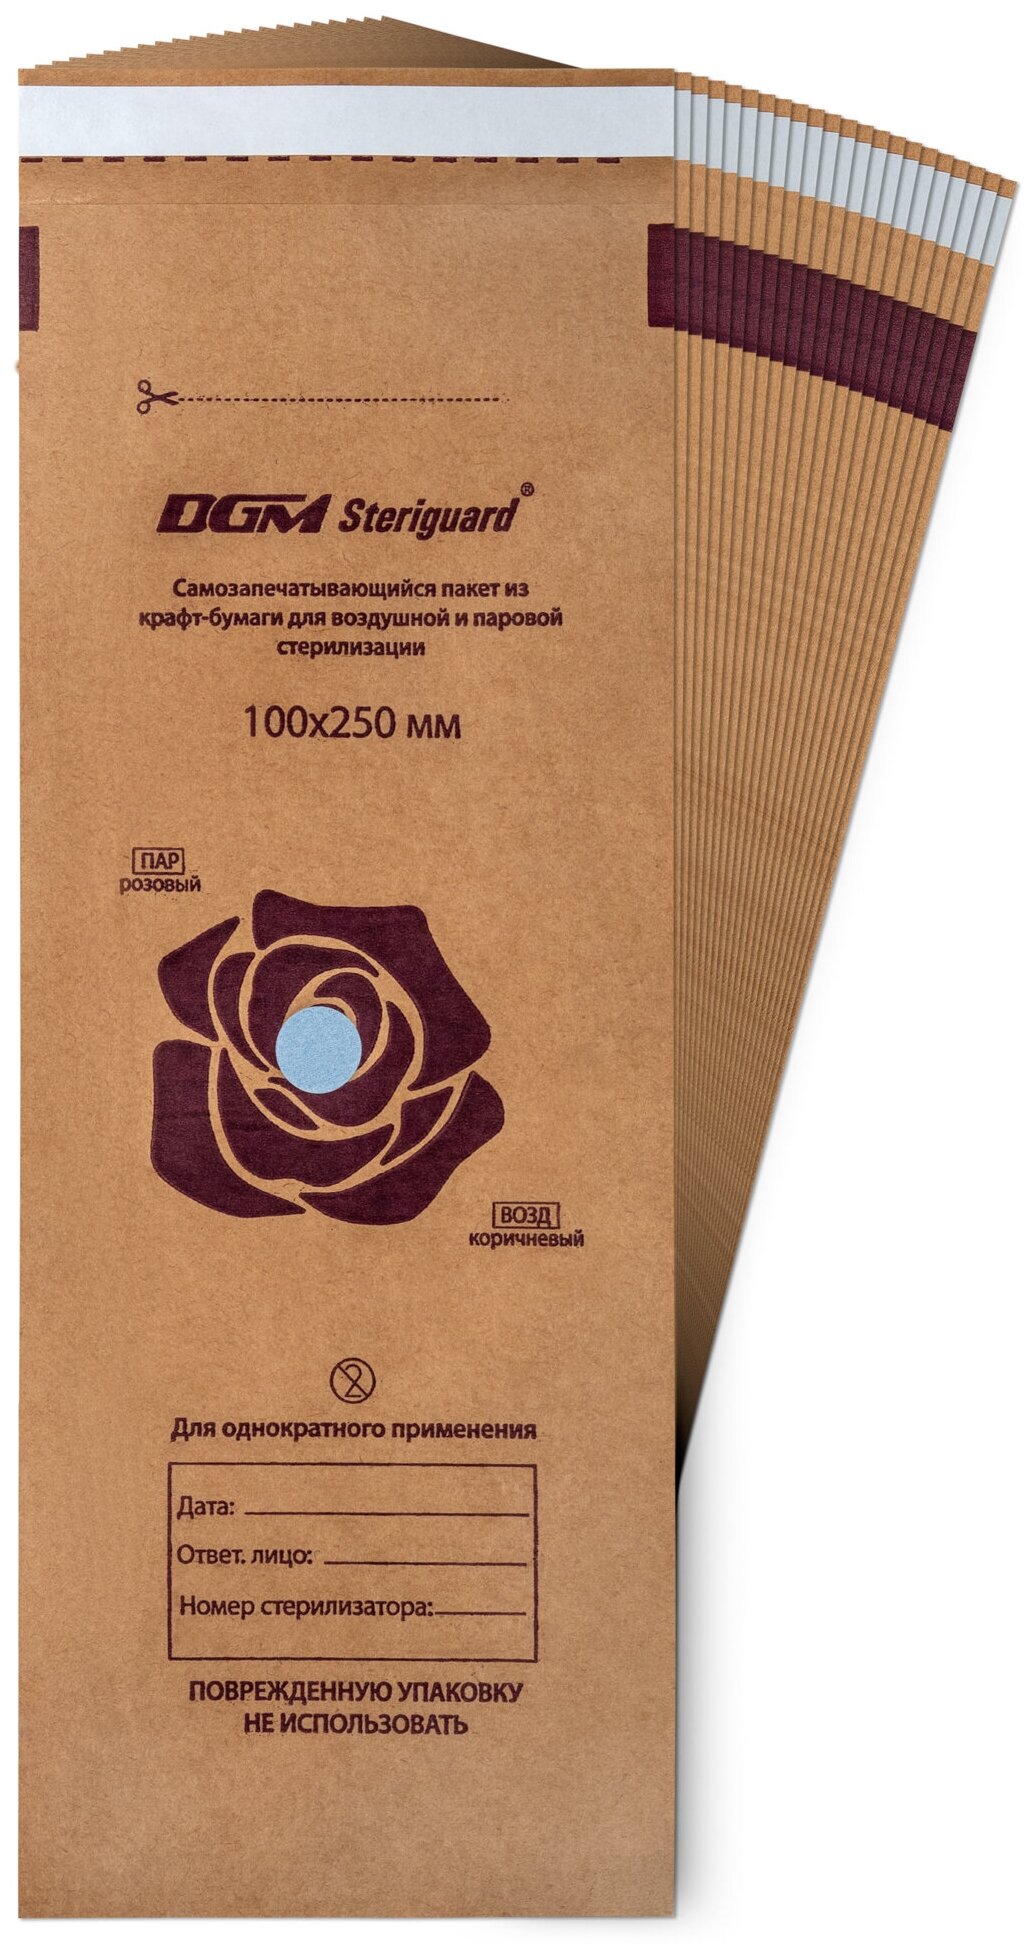 DGM Steriguard, крафт-пакет для стерилизации (100*250 мм), 100 шт